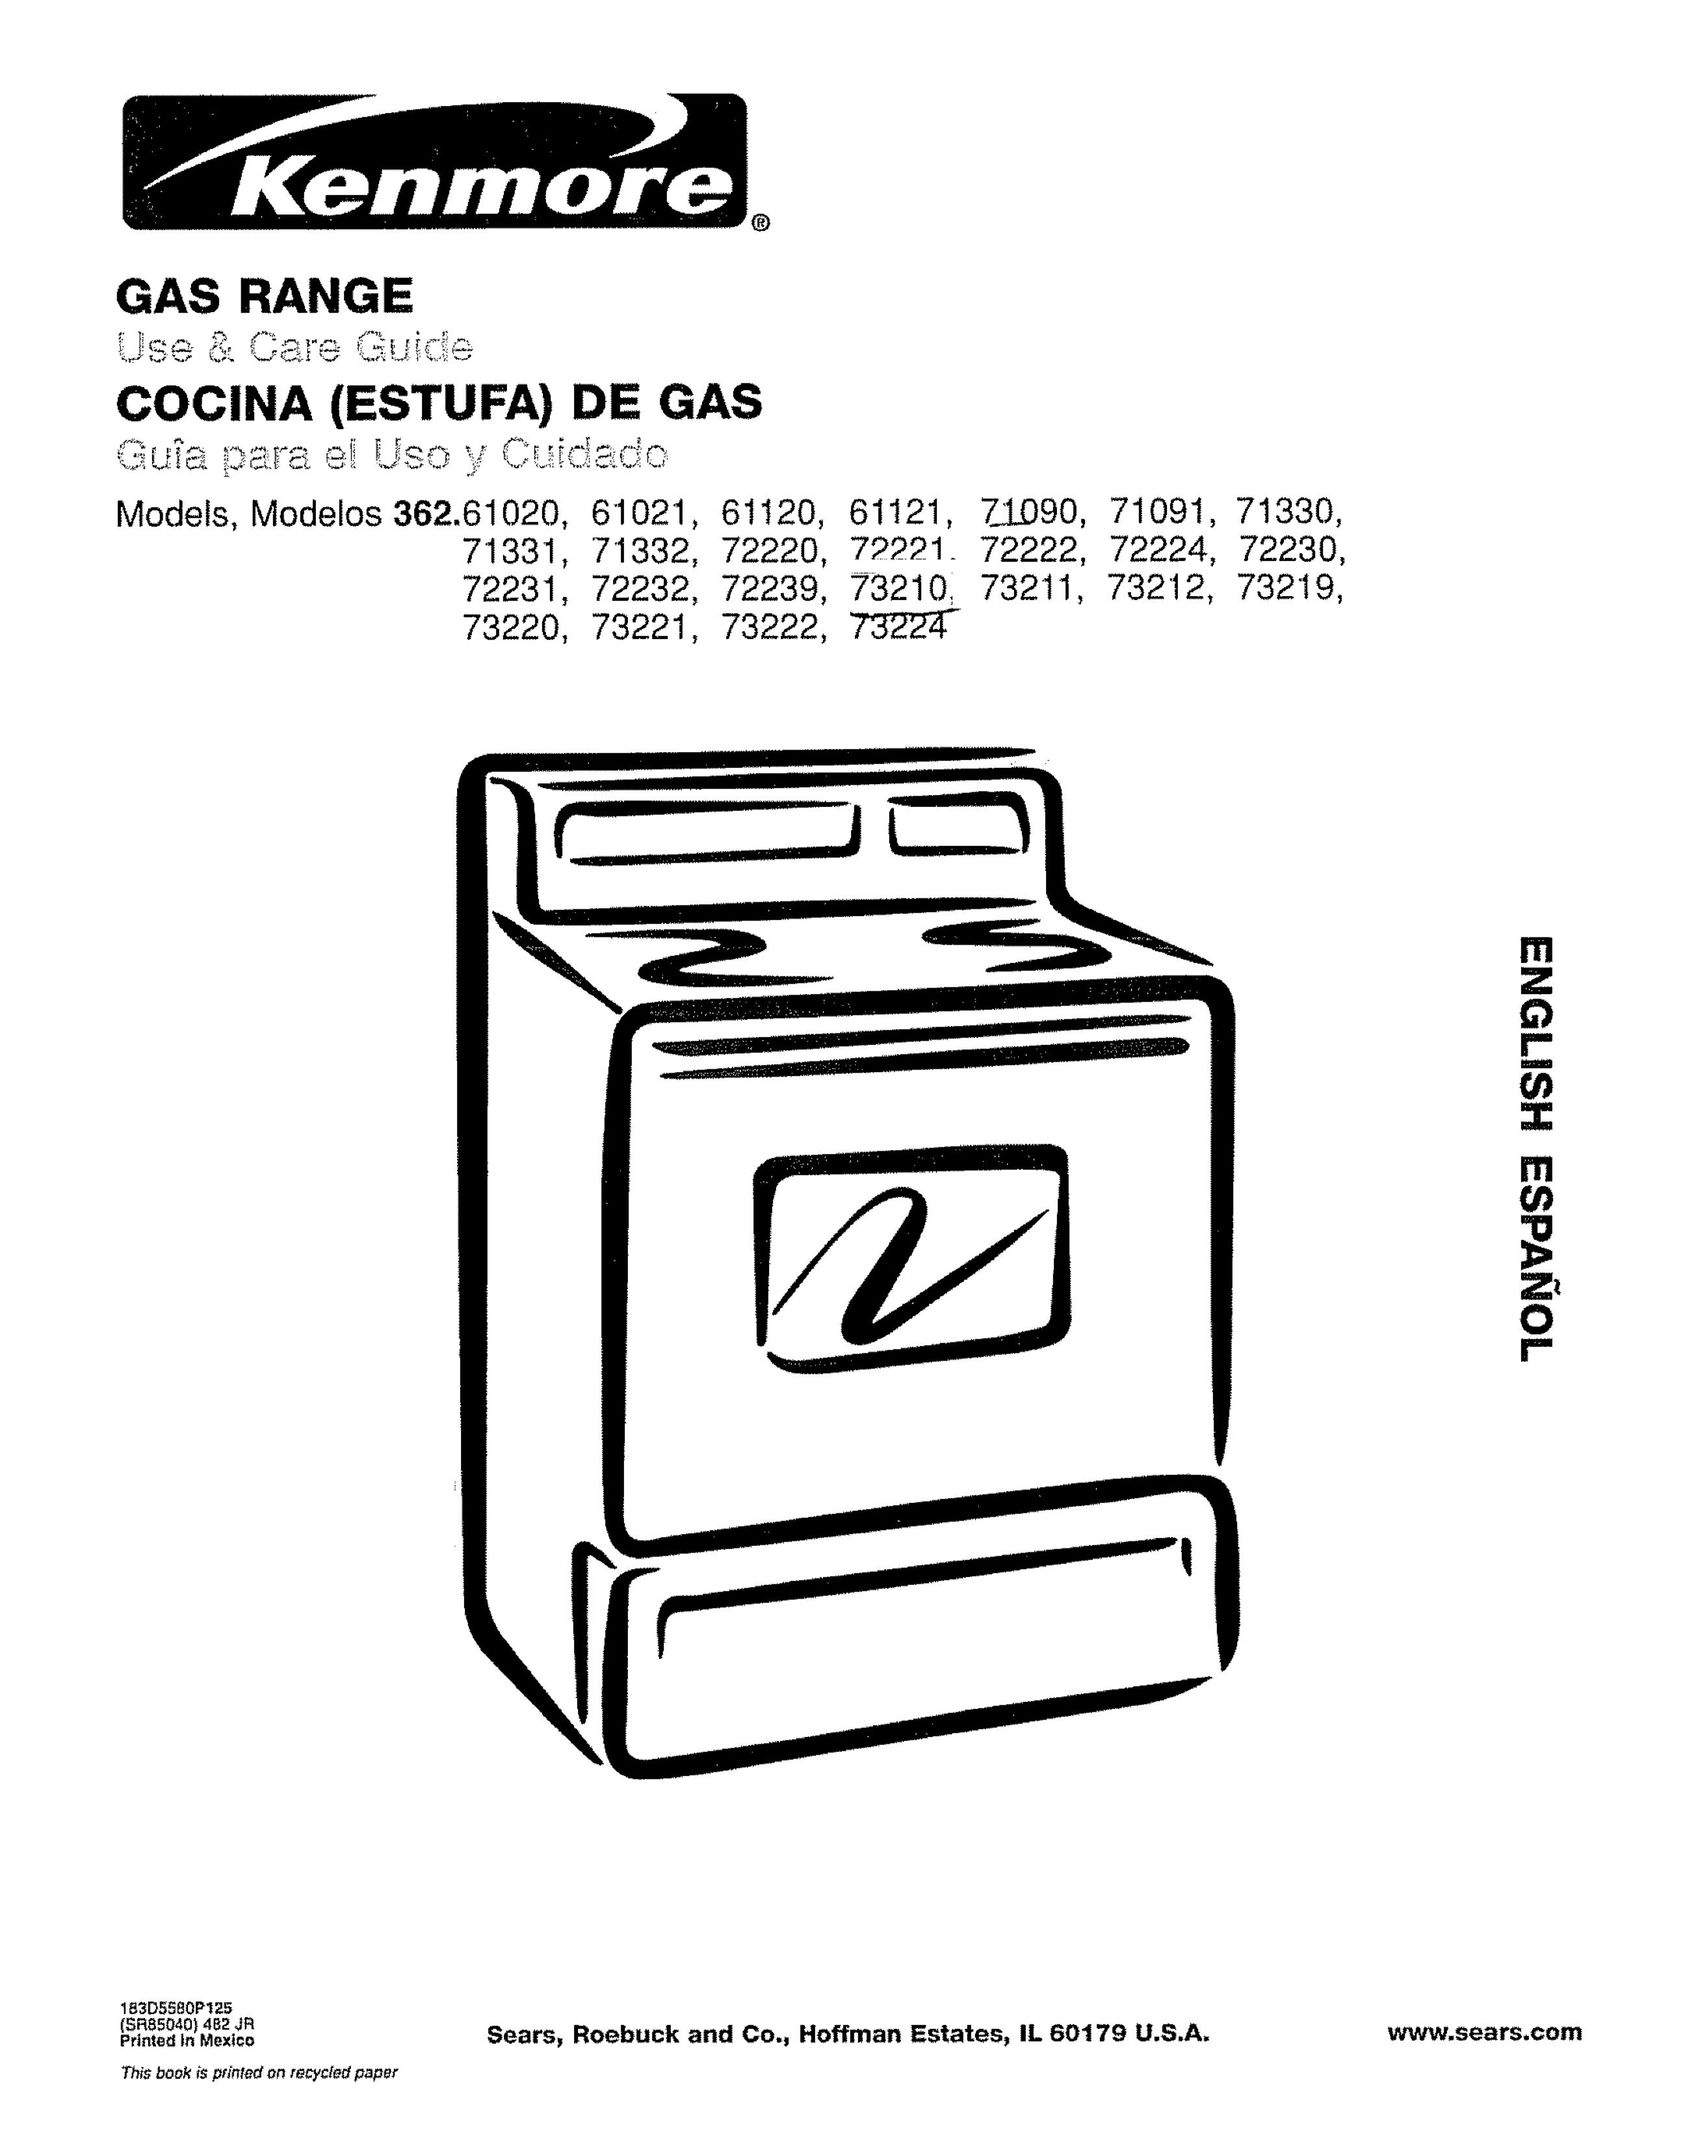 Kenmore 362.71330 Range User Manual